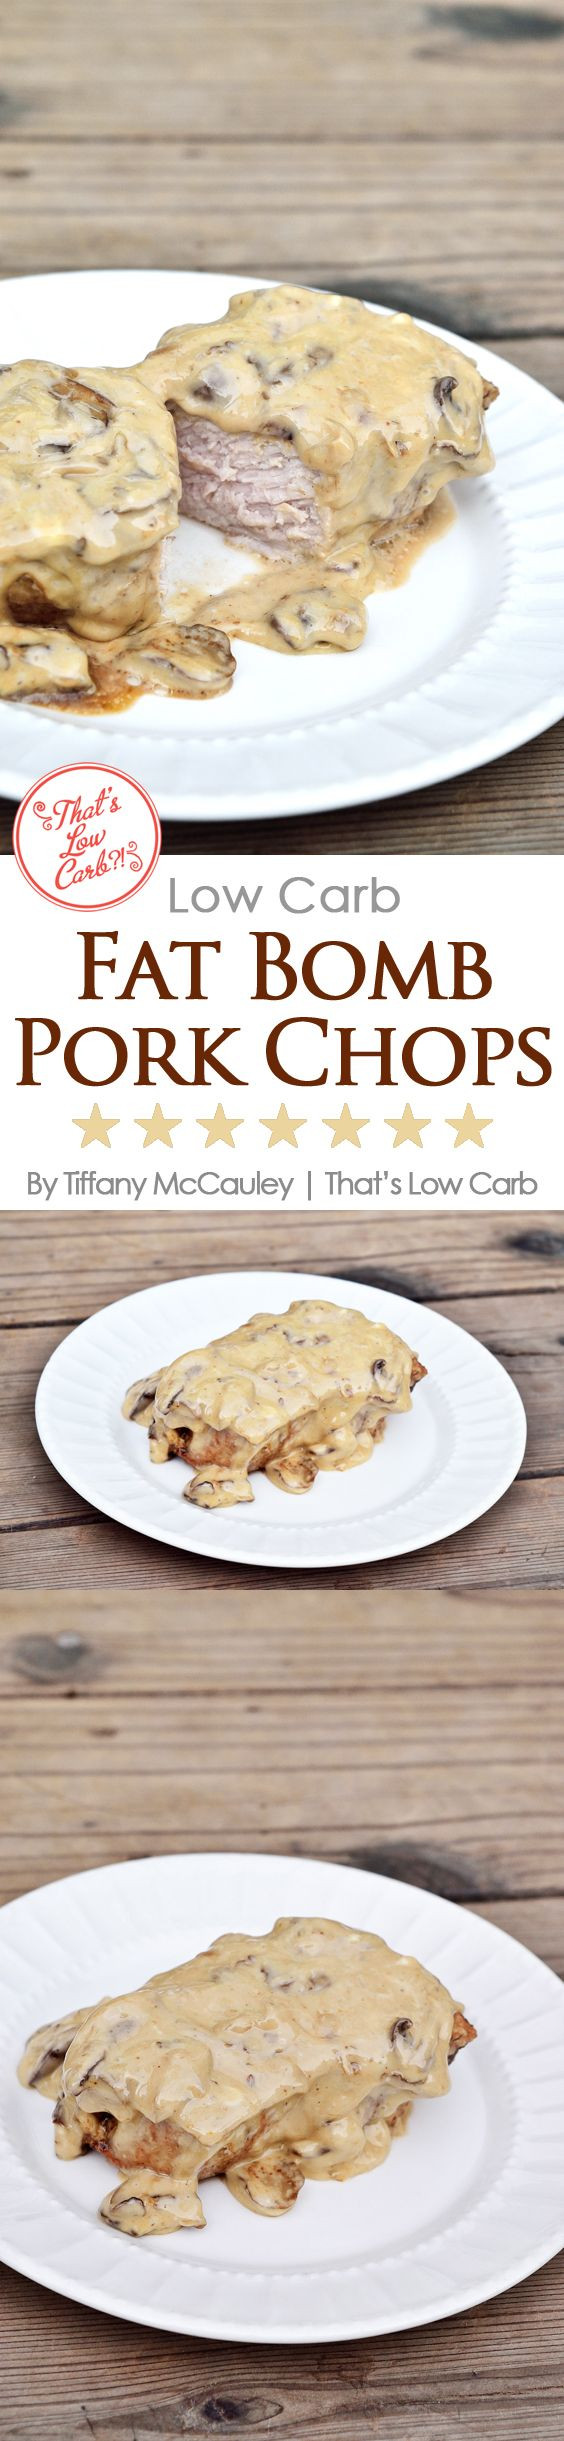 Low Calorie Recipes For Pork Chops
 Low Carb Fat Bomb Pork Chops Recipe – KetosisDiet